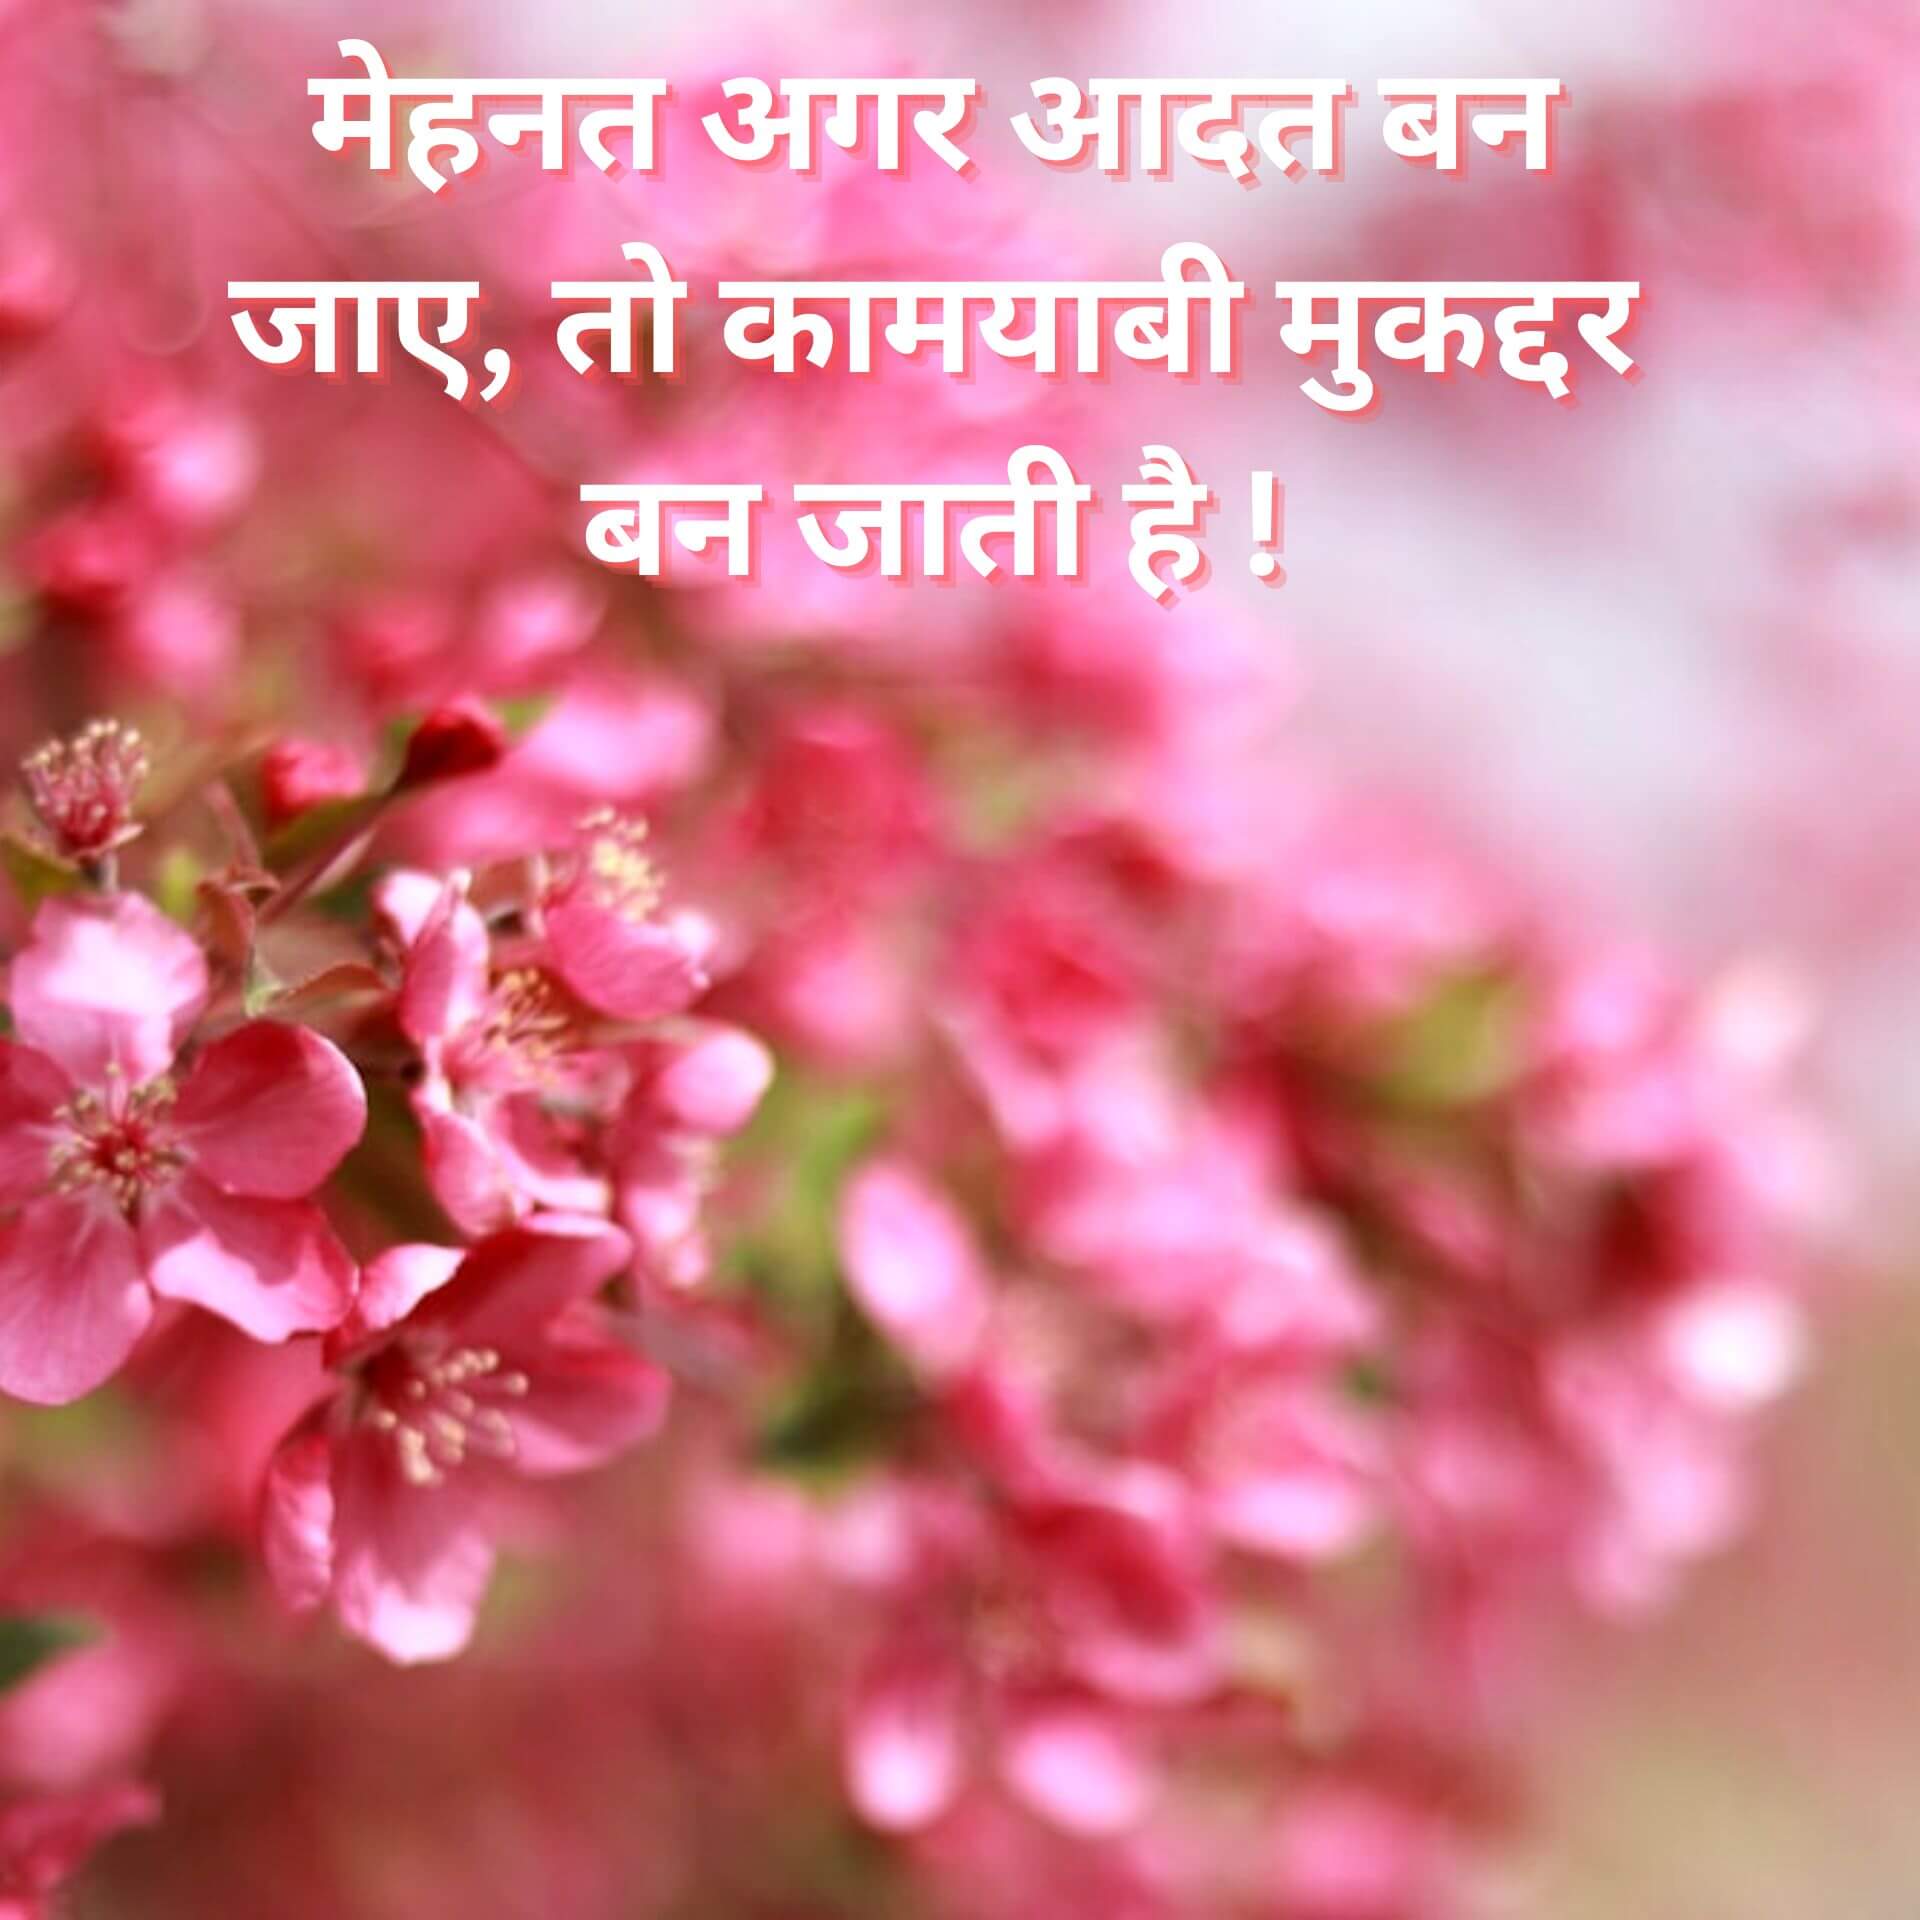 Hindi Motivational Quotes photo Download Free 2